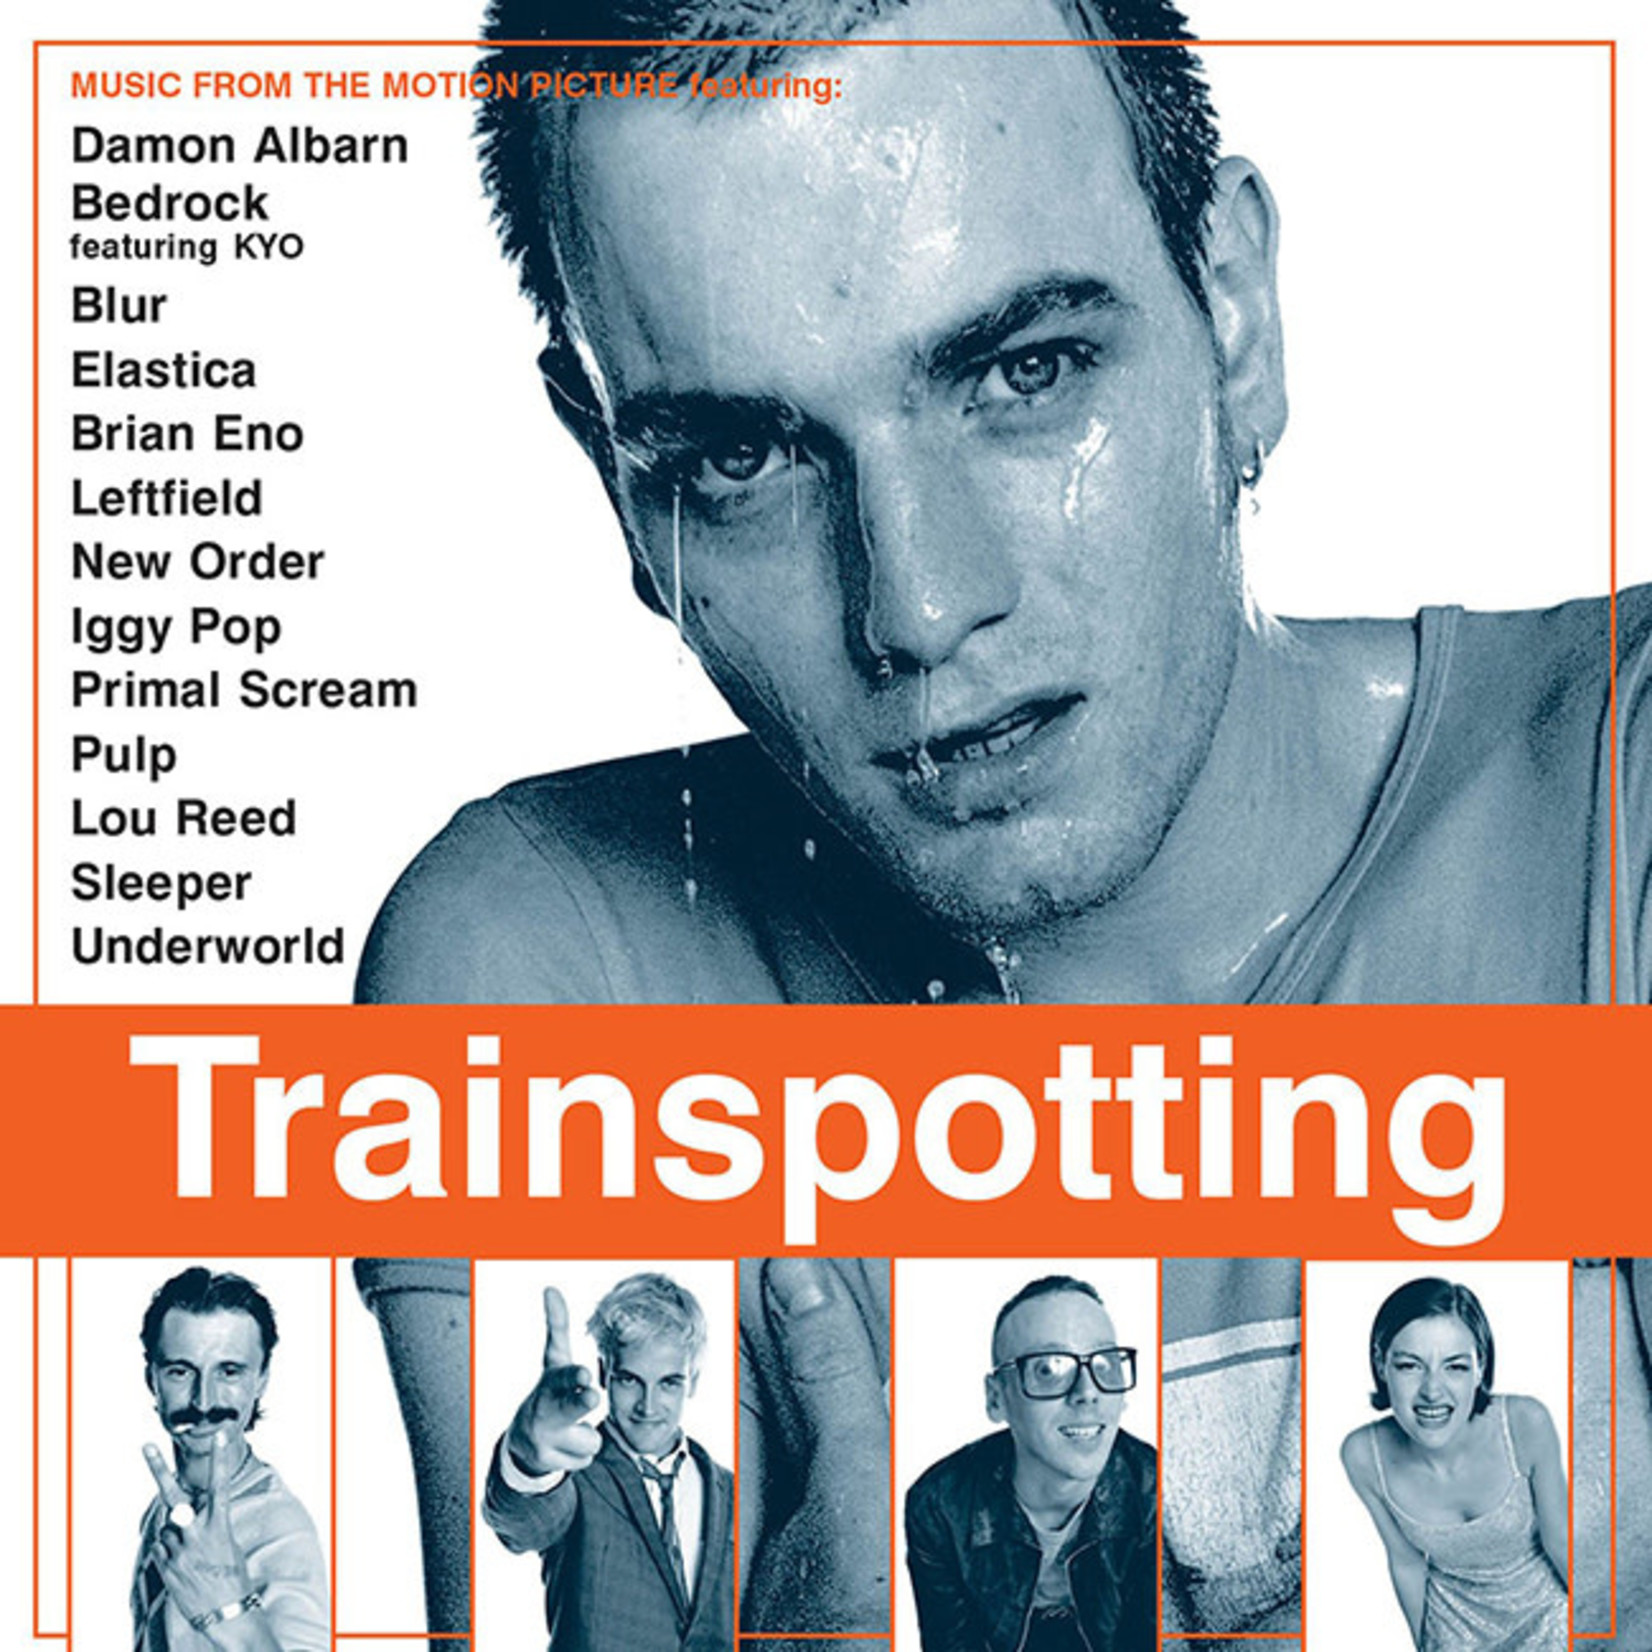 [New] Various Artists - Trainspotting (2LP, soundtrack)